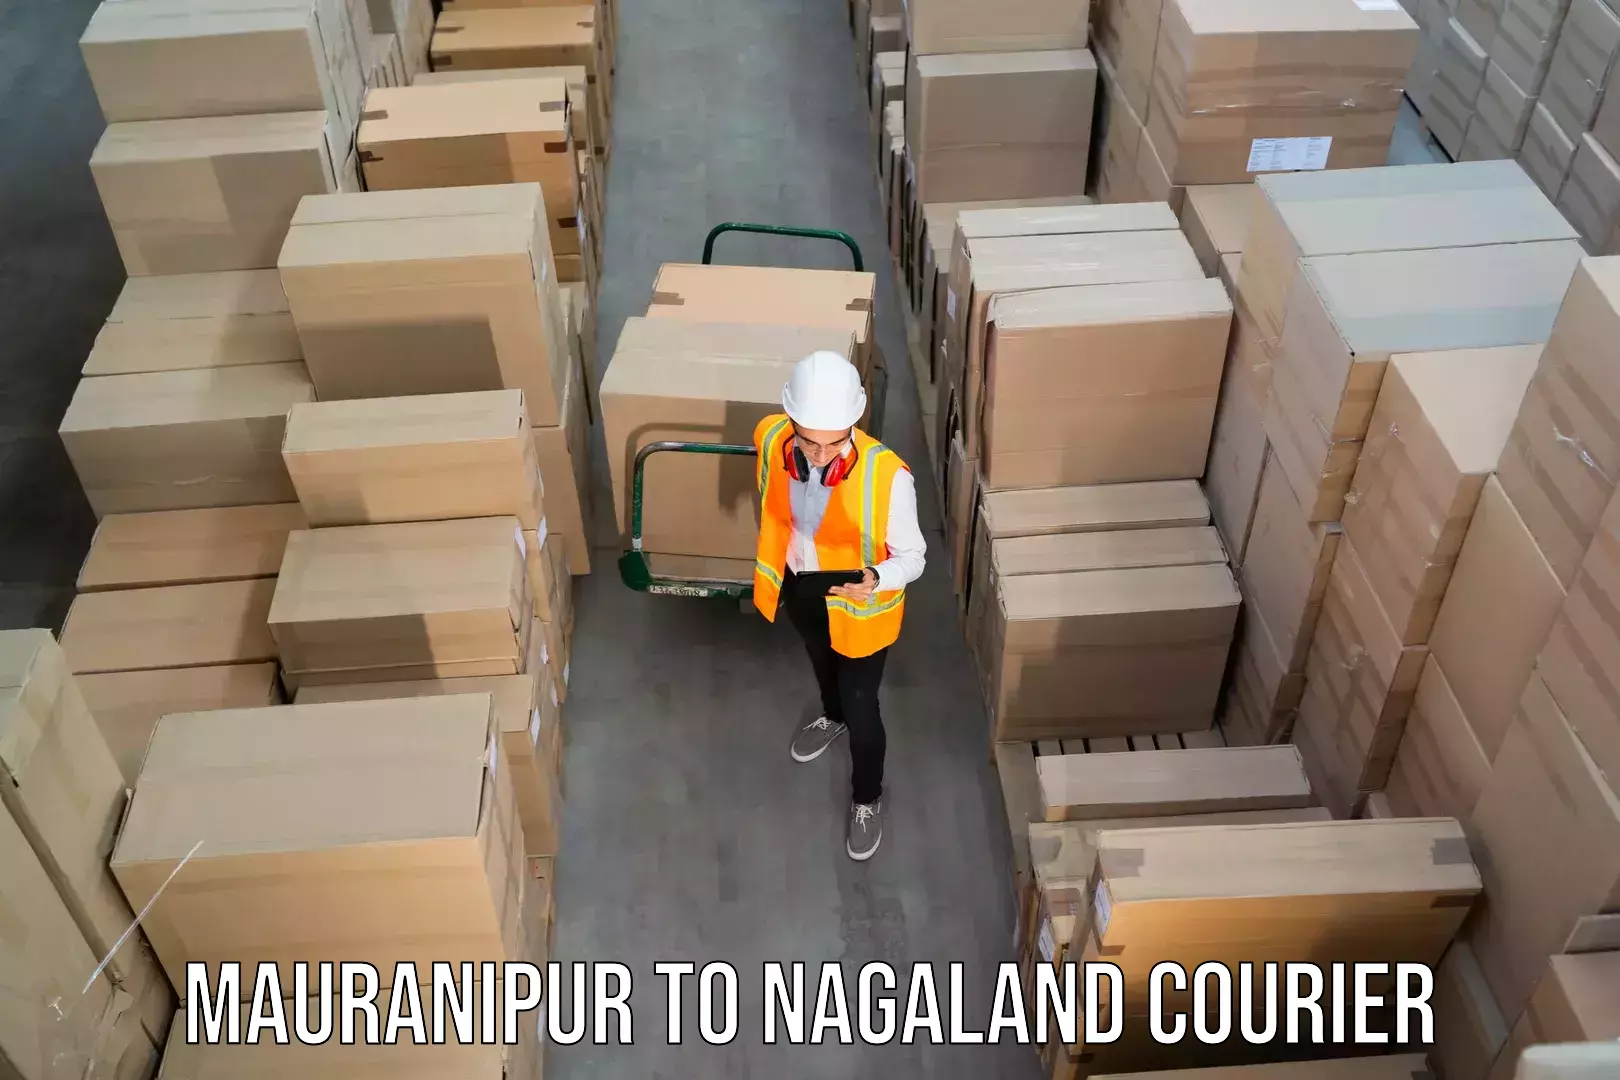 Quick dispatch service Mauranipur to Nagaland